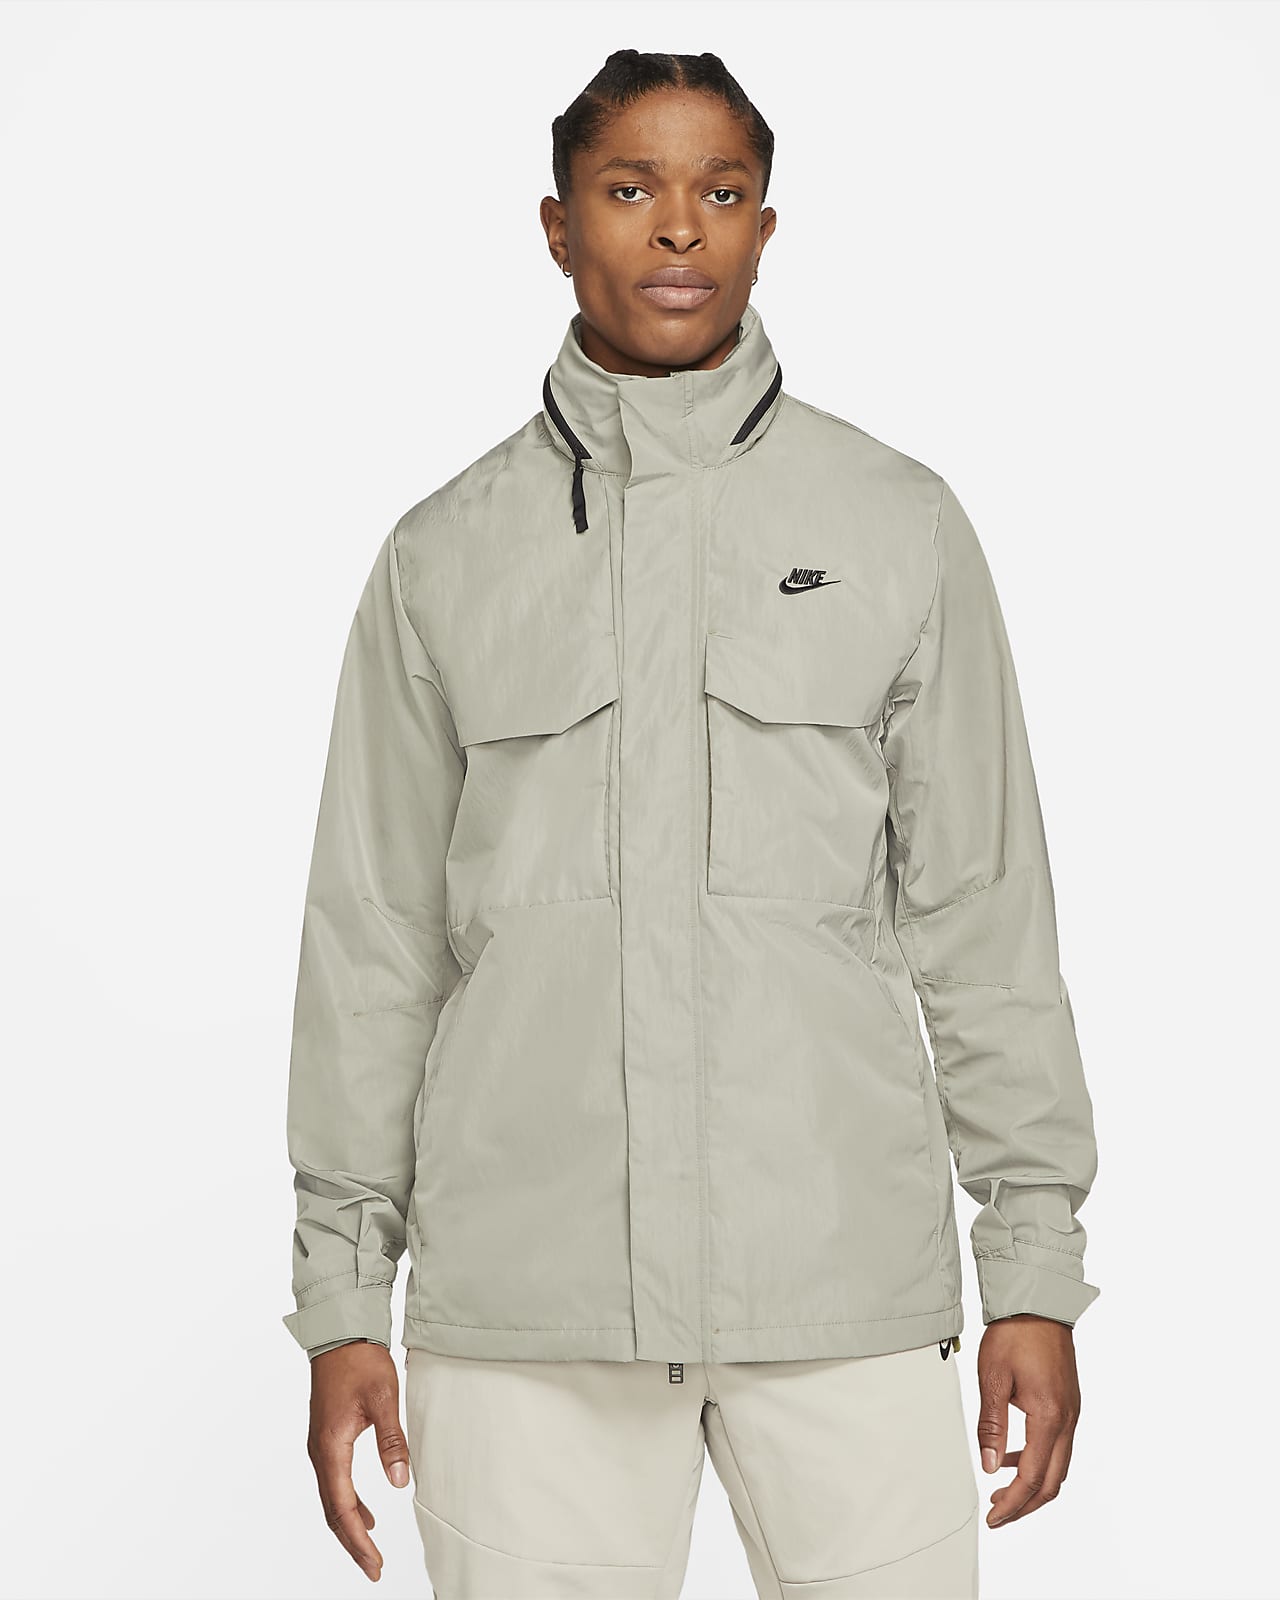 grey nike jacket mens> OFF-61%